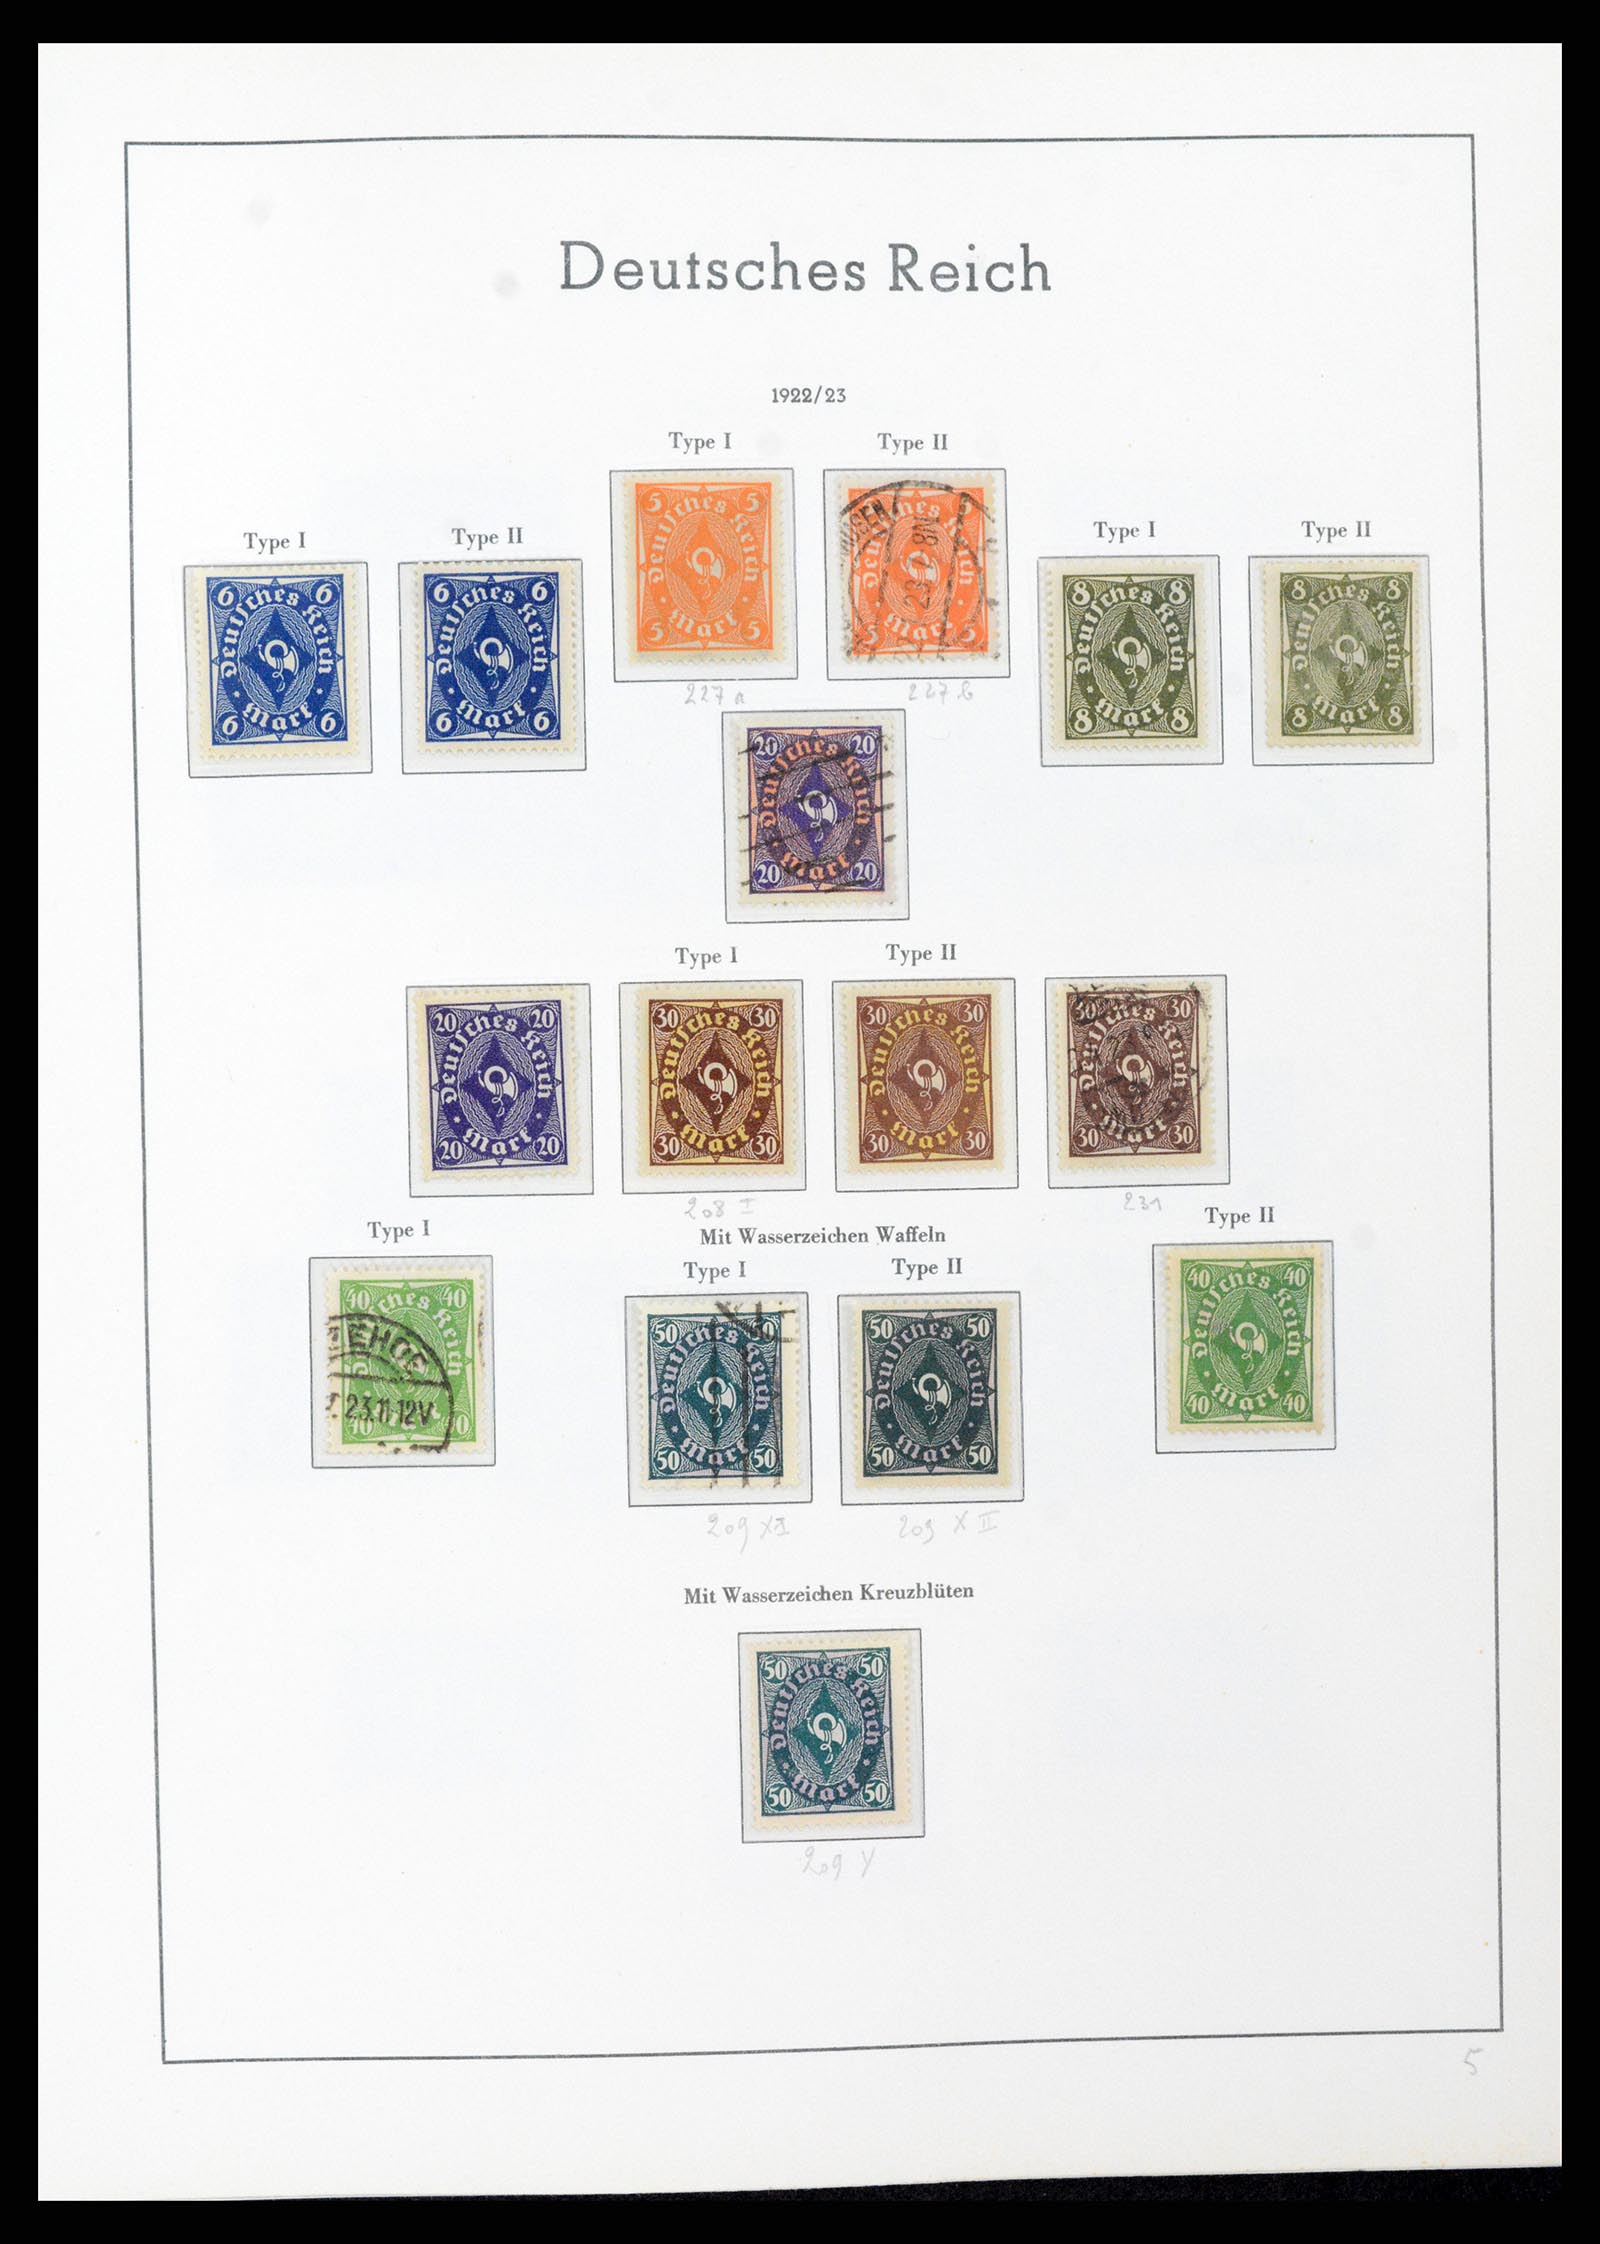 37589 021 - Stamp collection 37589 German Reich 1872-1945.